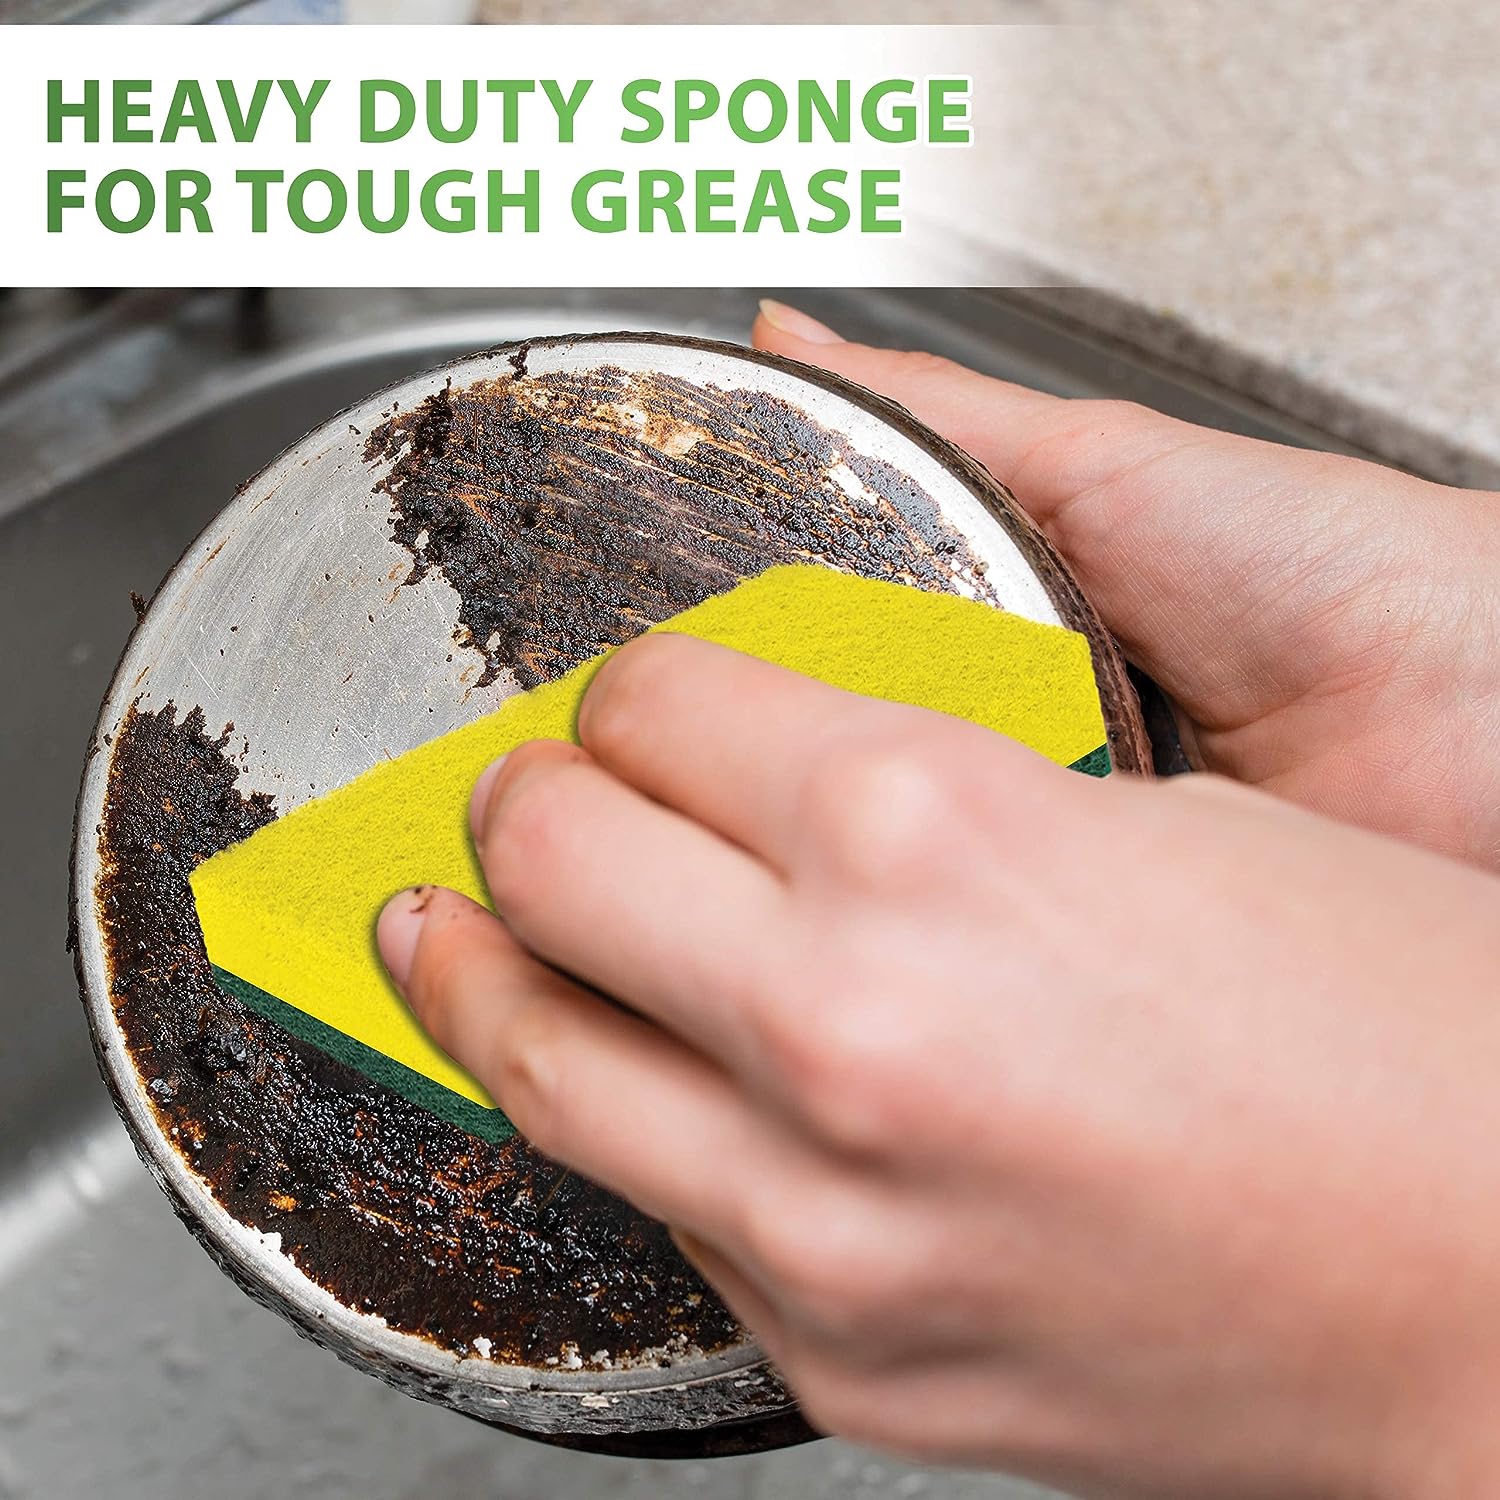 Heavy Duty Scrub Sponges - Dishwashing Sponge